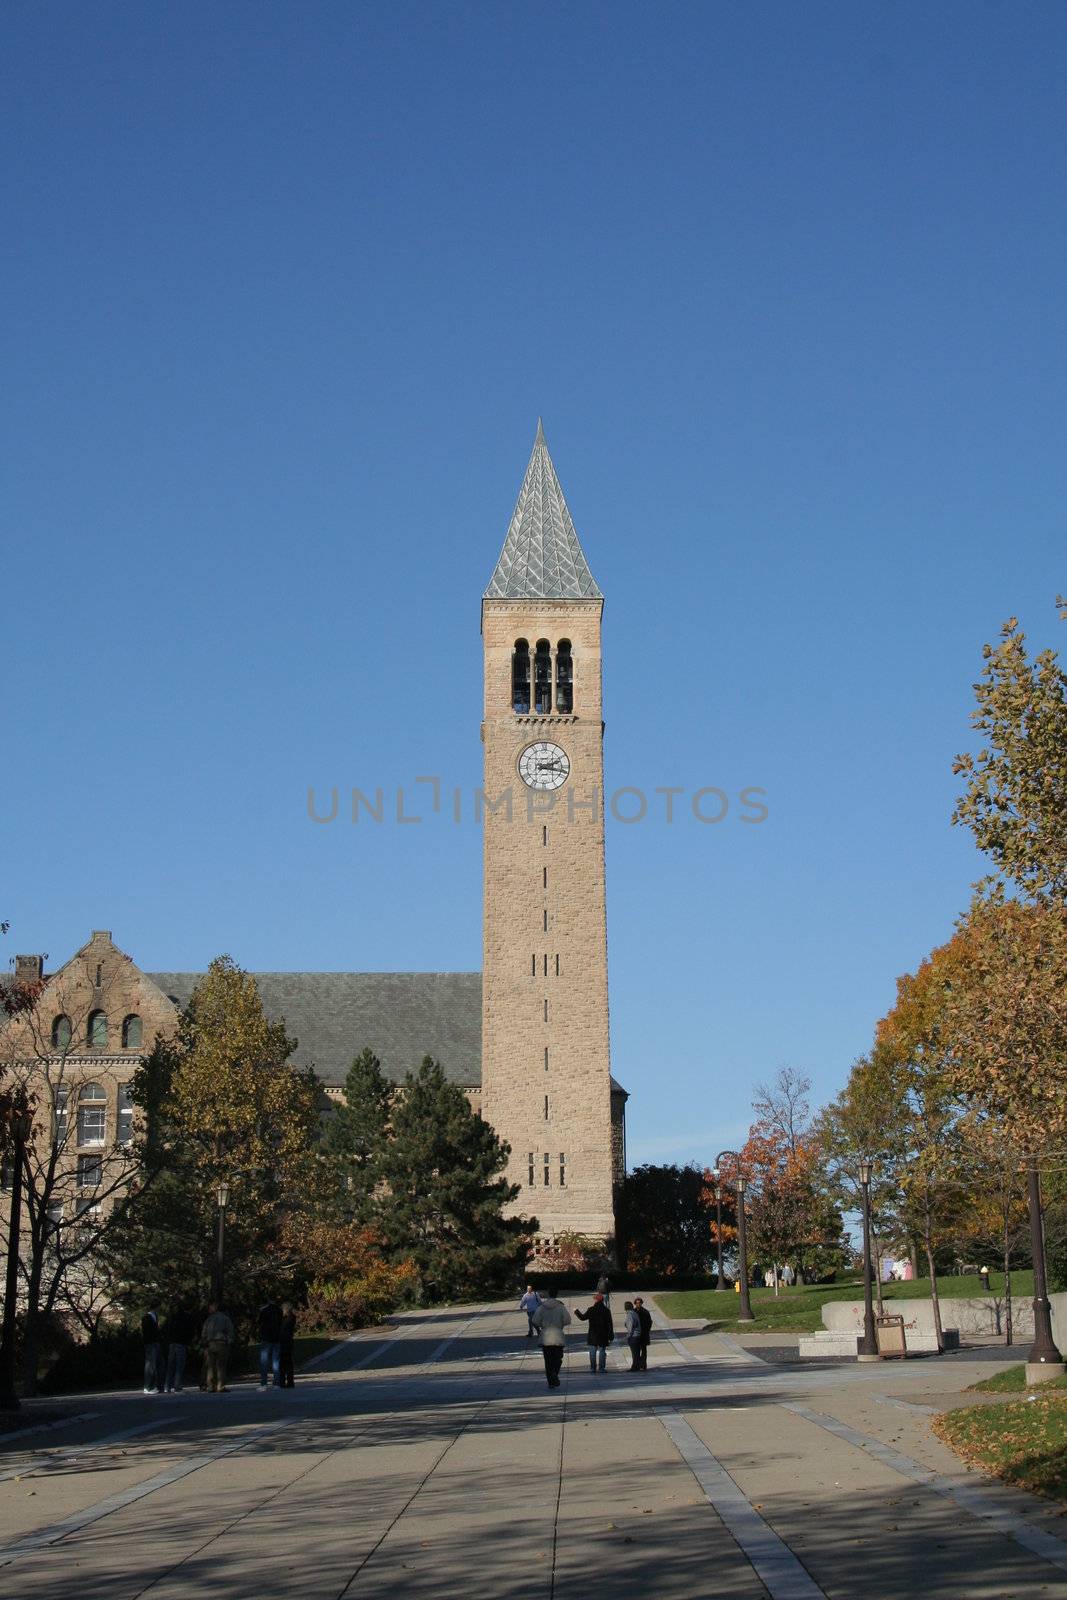 McGraw Clock Tower at Cornell University by werewolf57